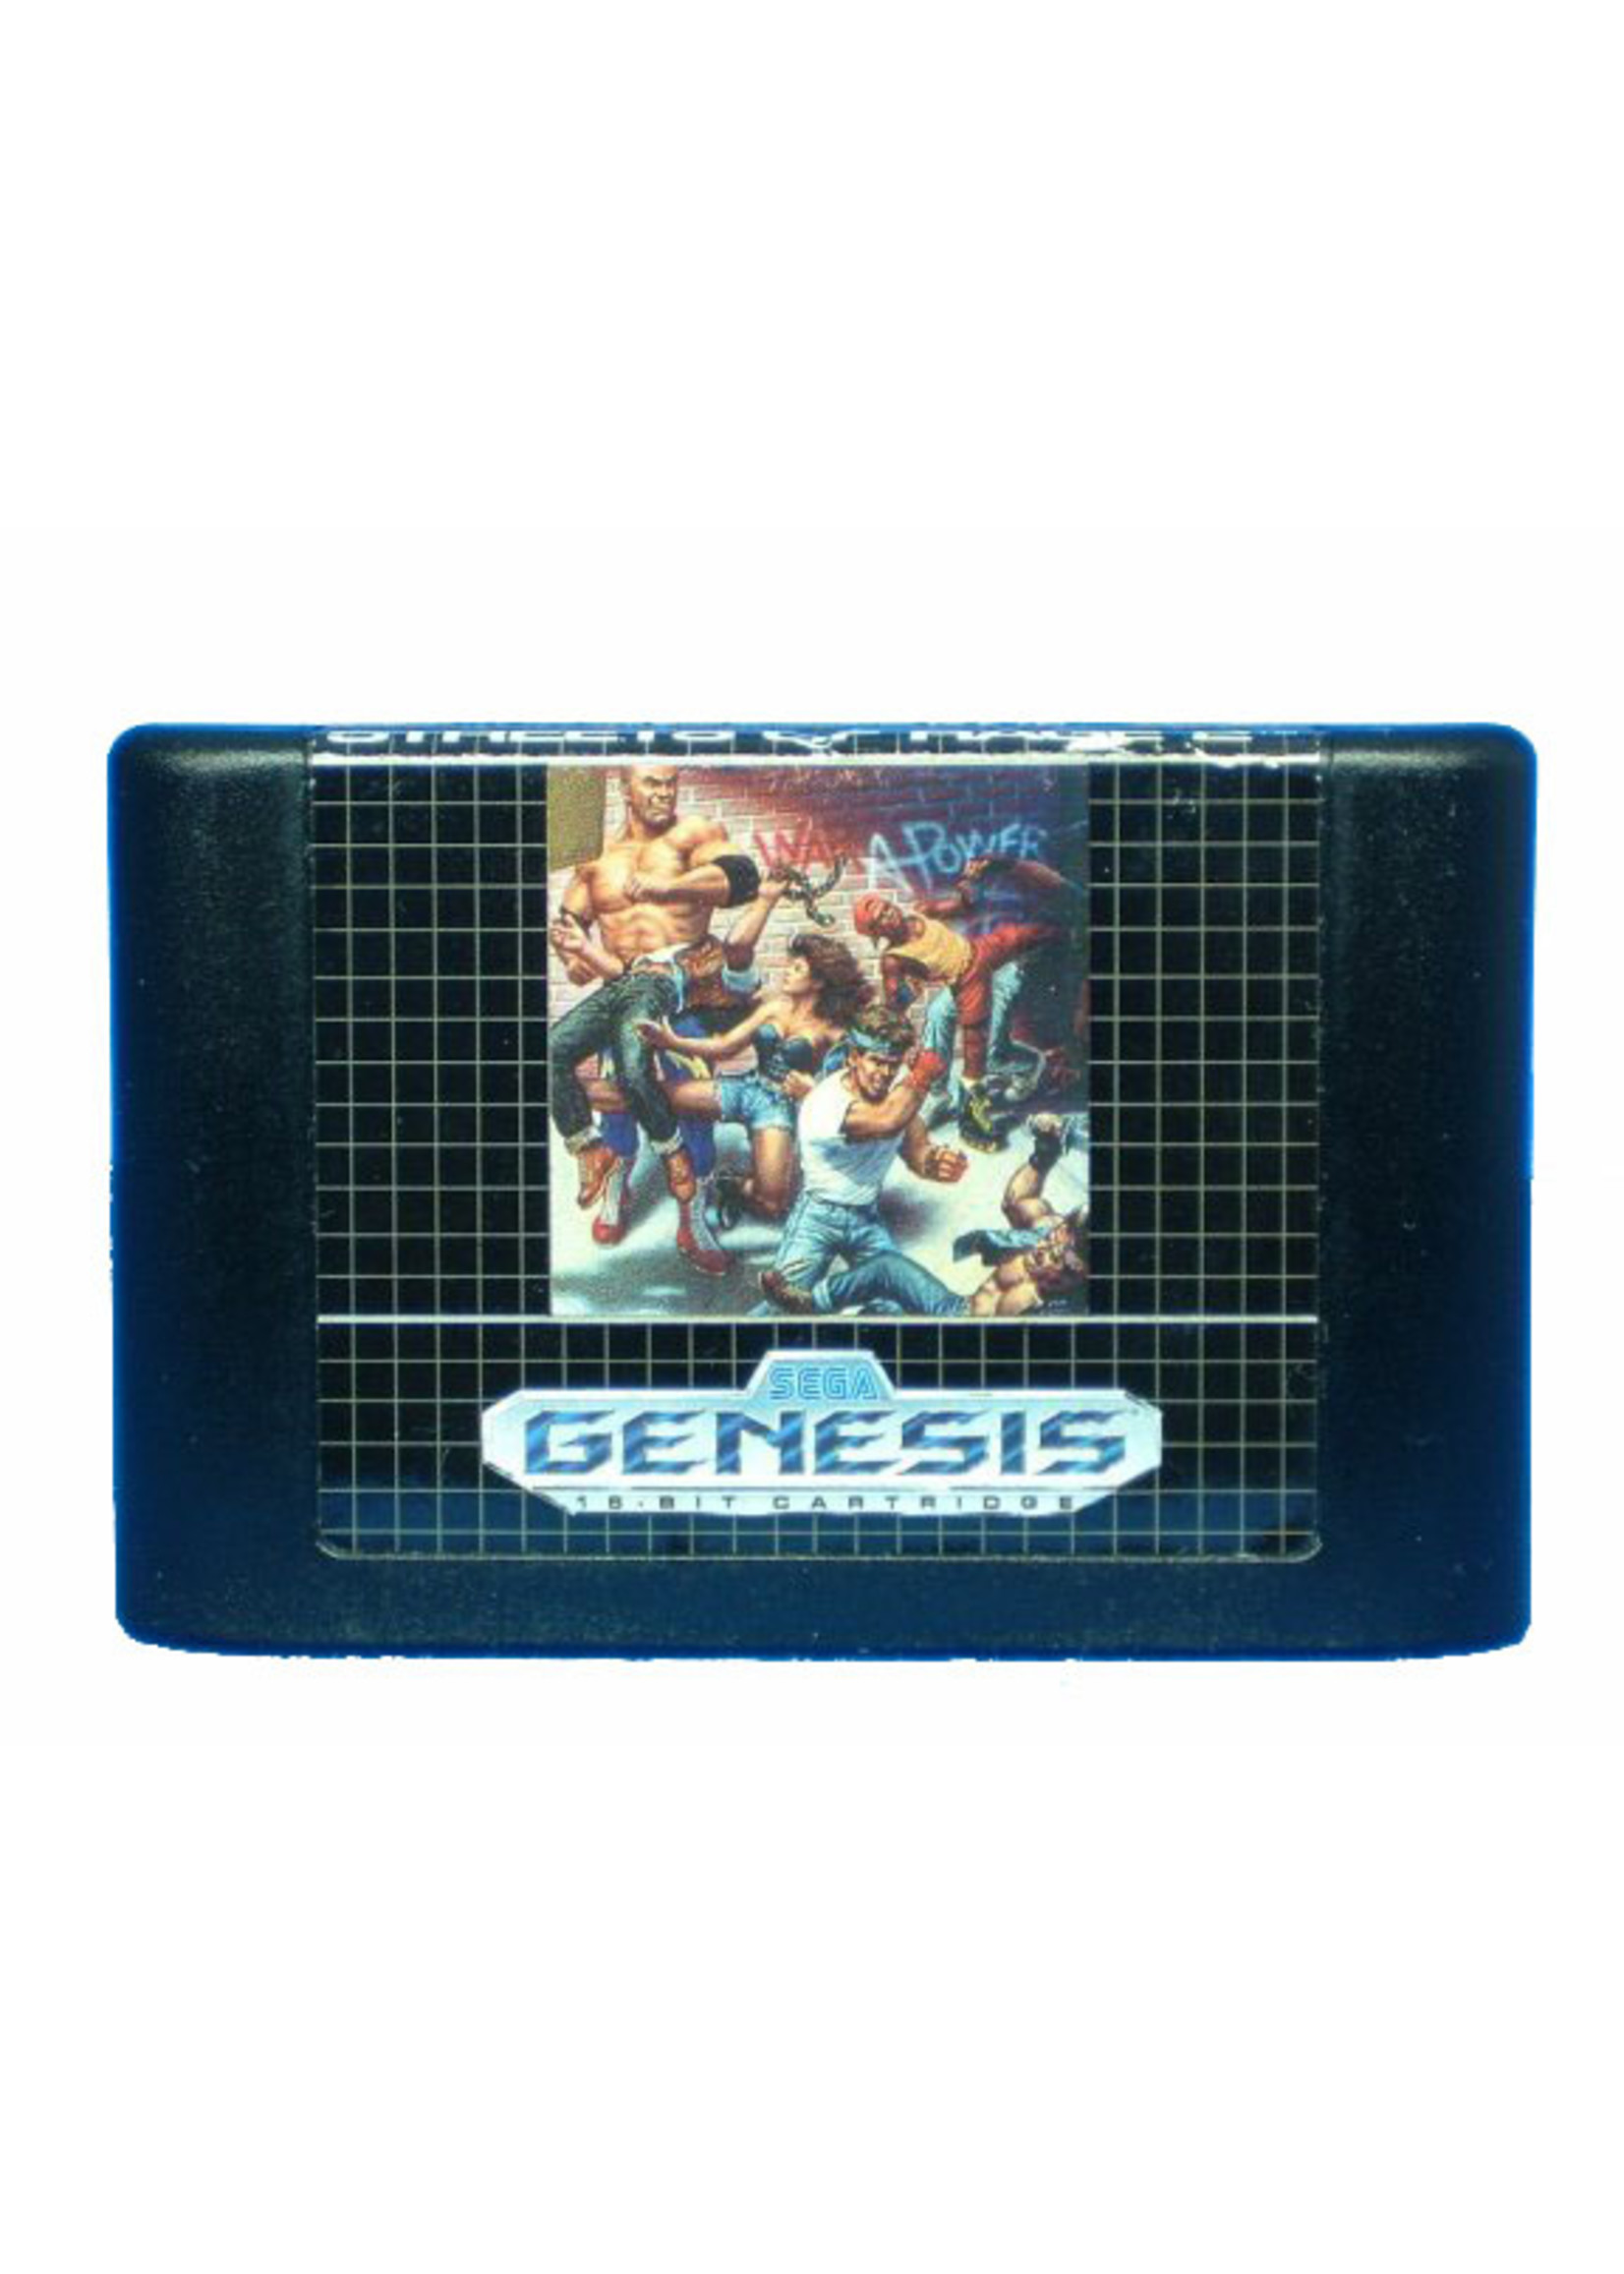 Sega Genesis Streets of Rage 2